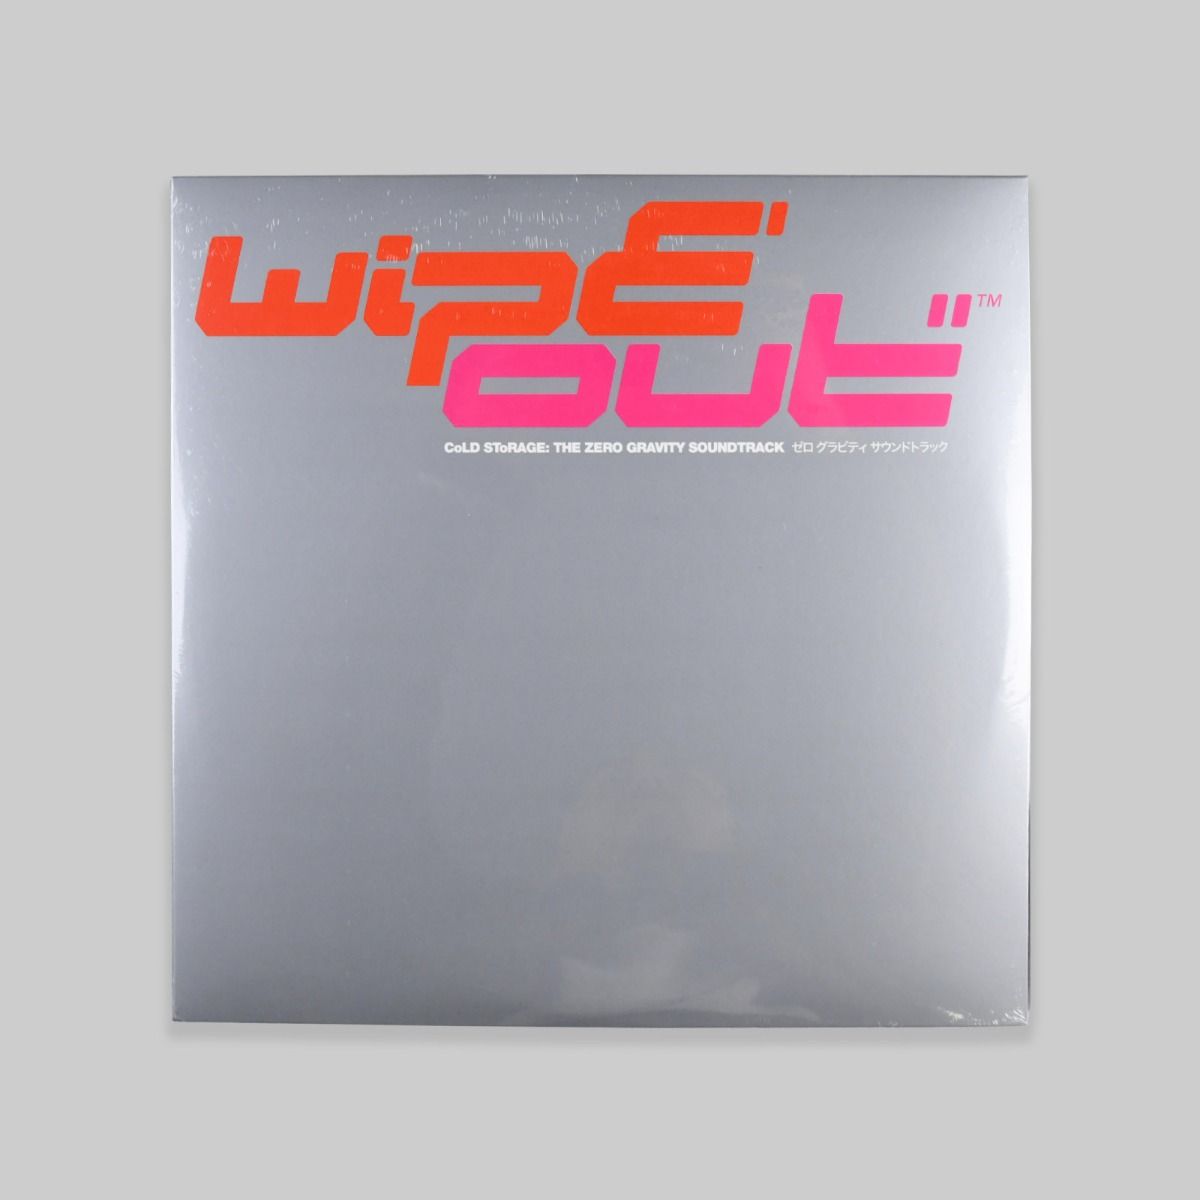 Cold Storage – wipE'out'' - The Zero Gravity Soundtrack 3x12" LP (Silver Vinyl)